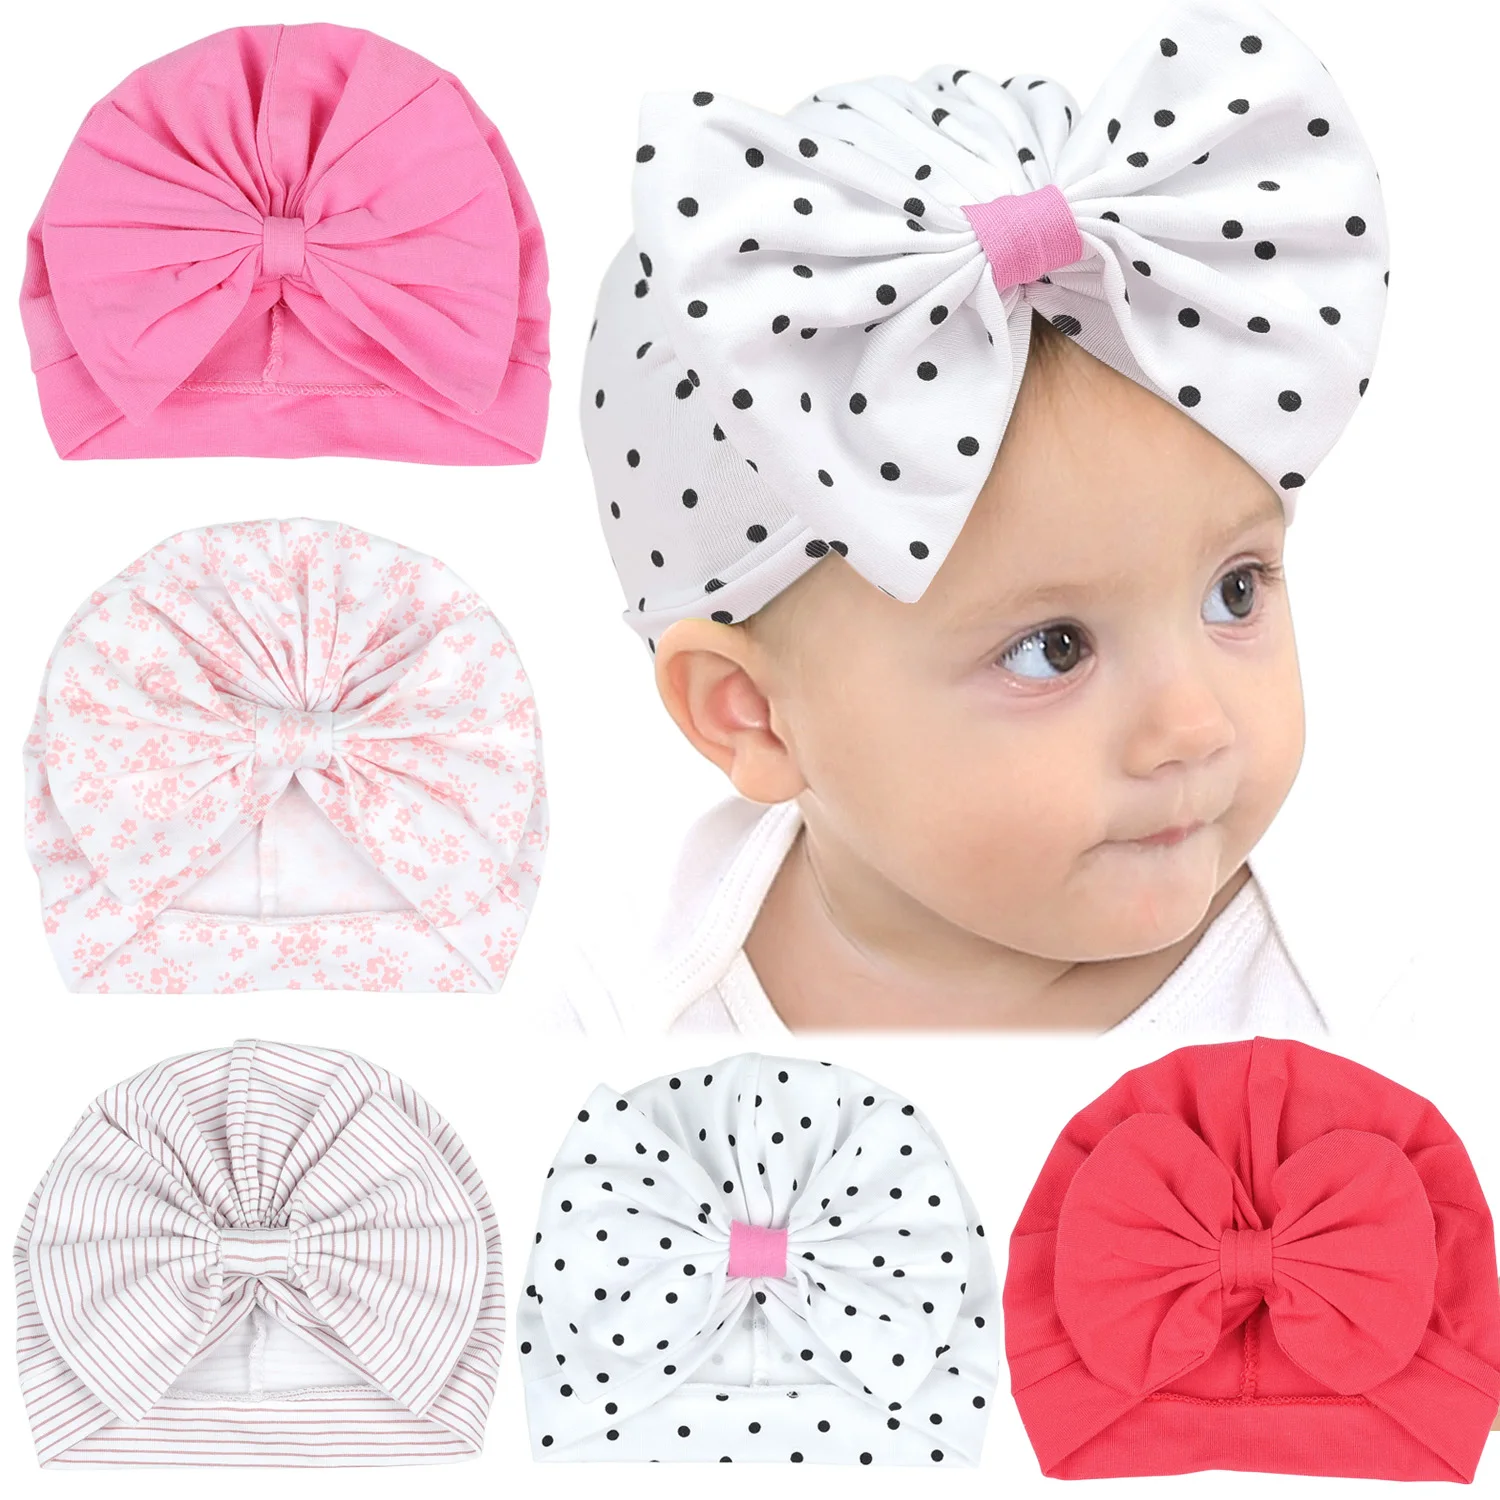 

10pc/lot Baby Indian Turban Hat Cute Knot Boys Girls Cap Floral Prints Head Wrap Soft Newborn Infant Beanies Kids Hat Headbands